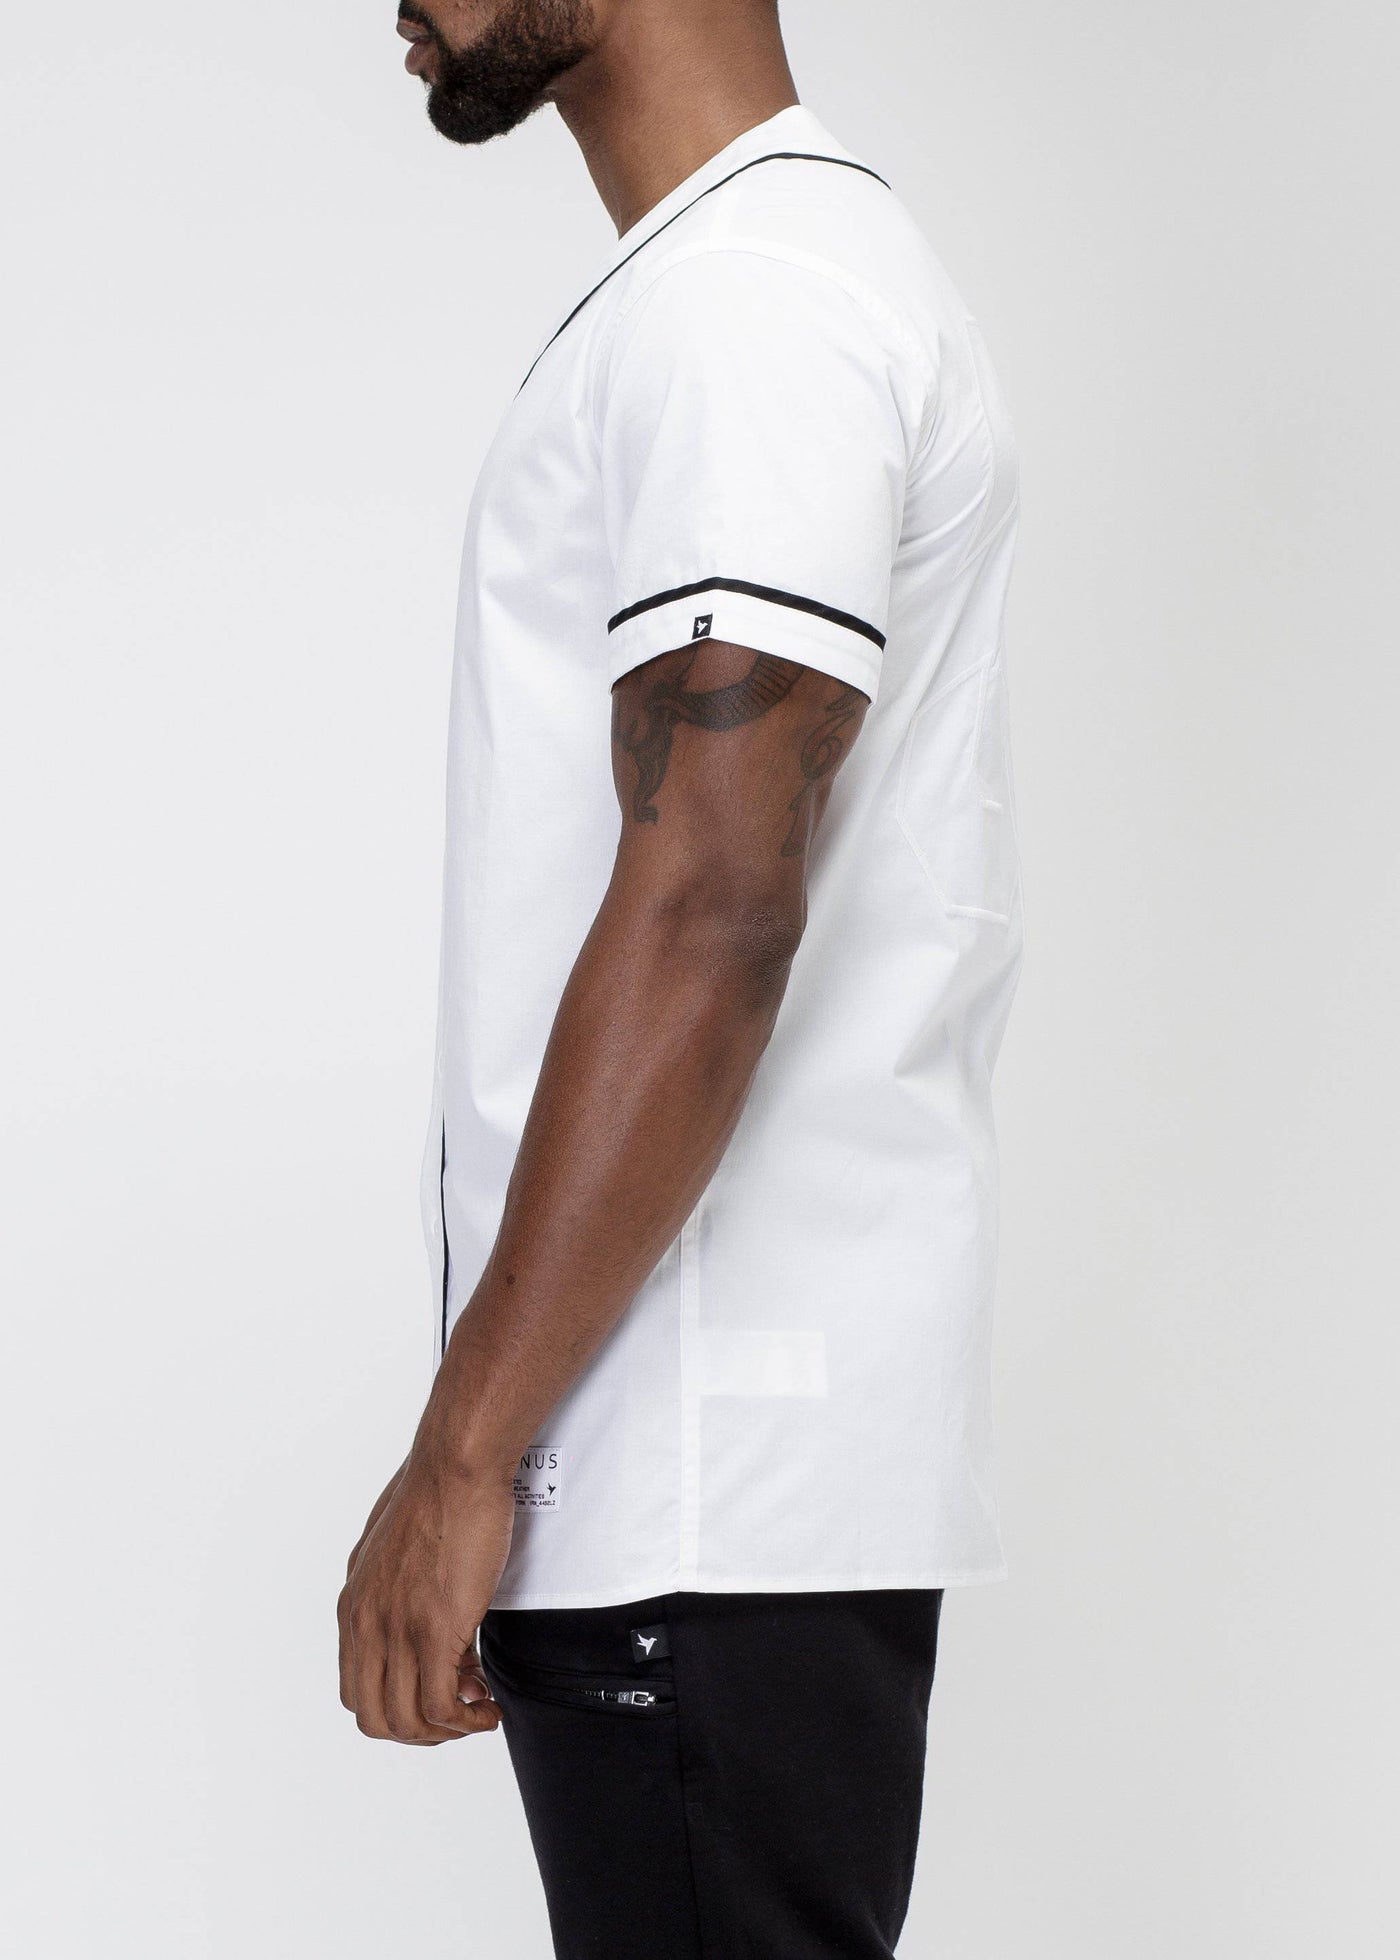 Konus Men's Woven Baseball Jersey Shirt in White by Shop at Konus